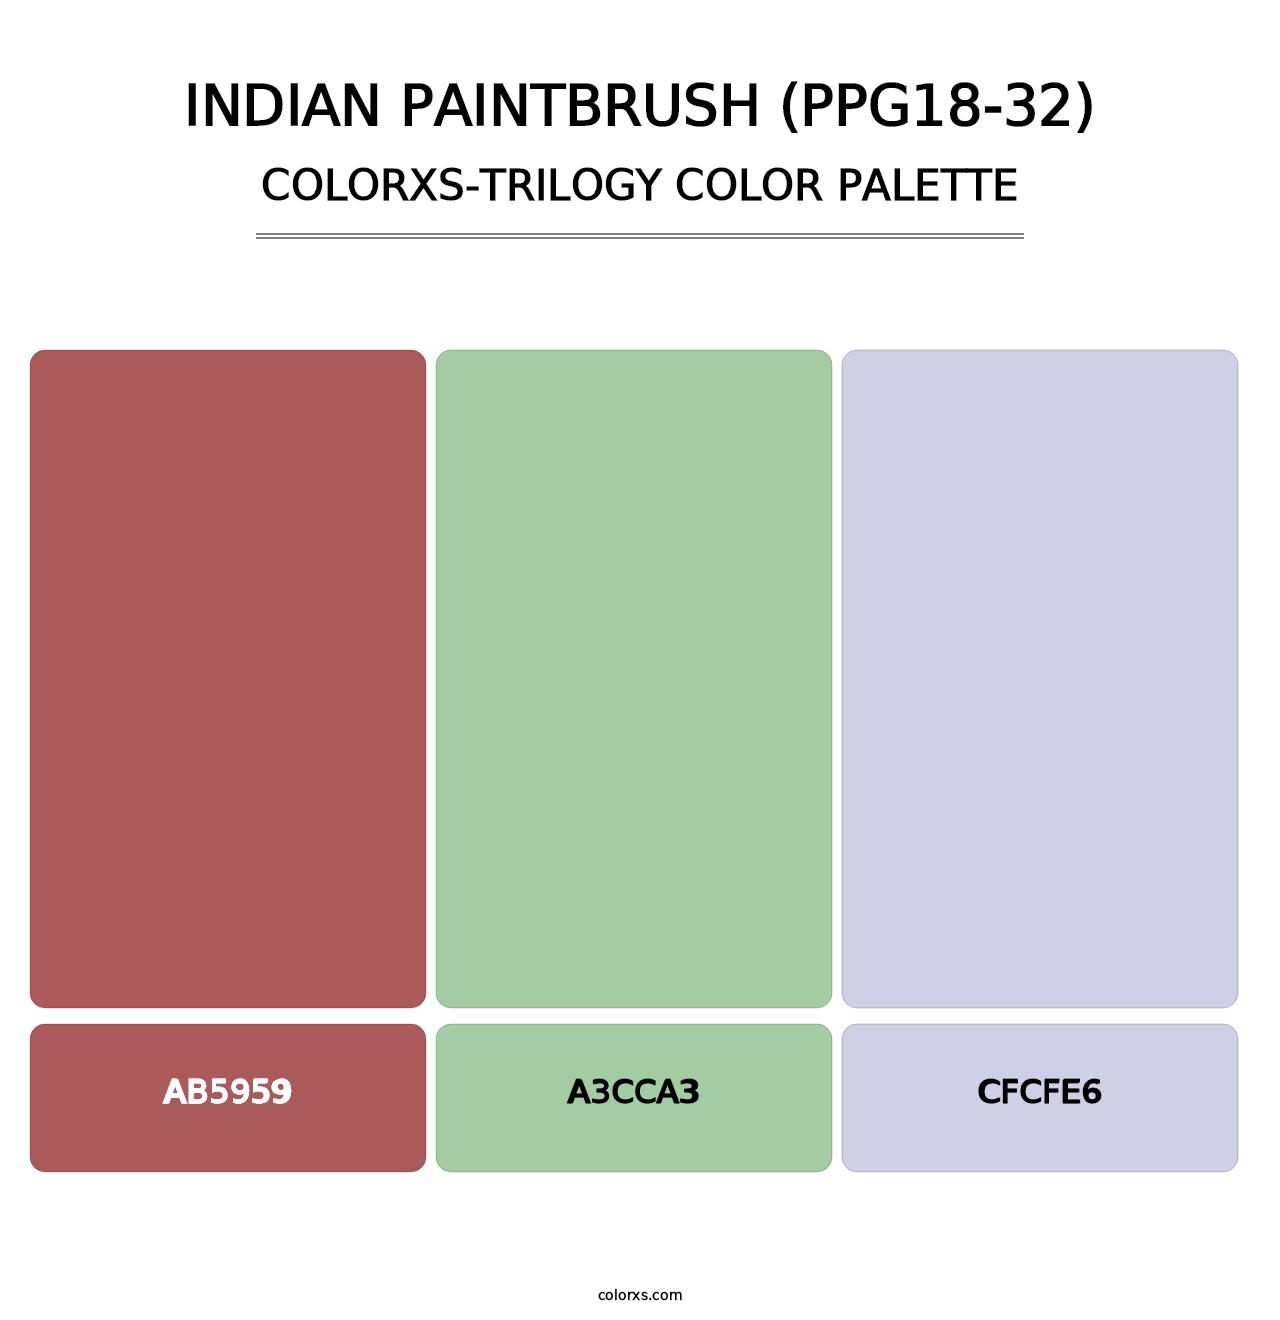 Indian Paintbrush (PPG18-32) - Colorxs Trilogy Palette